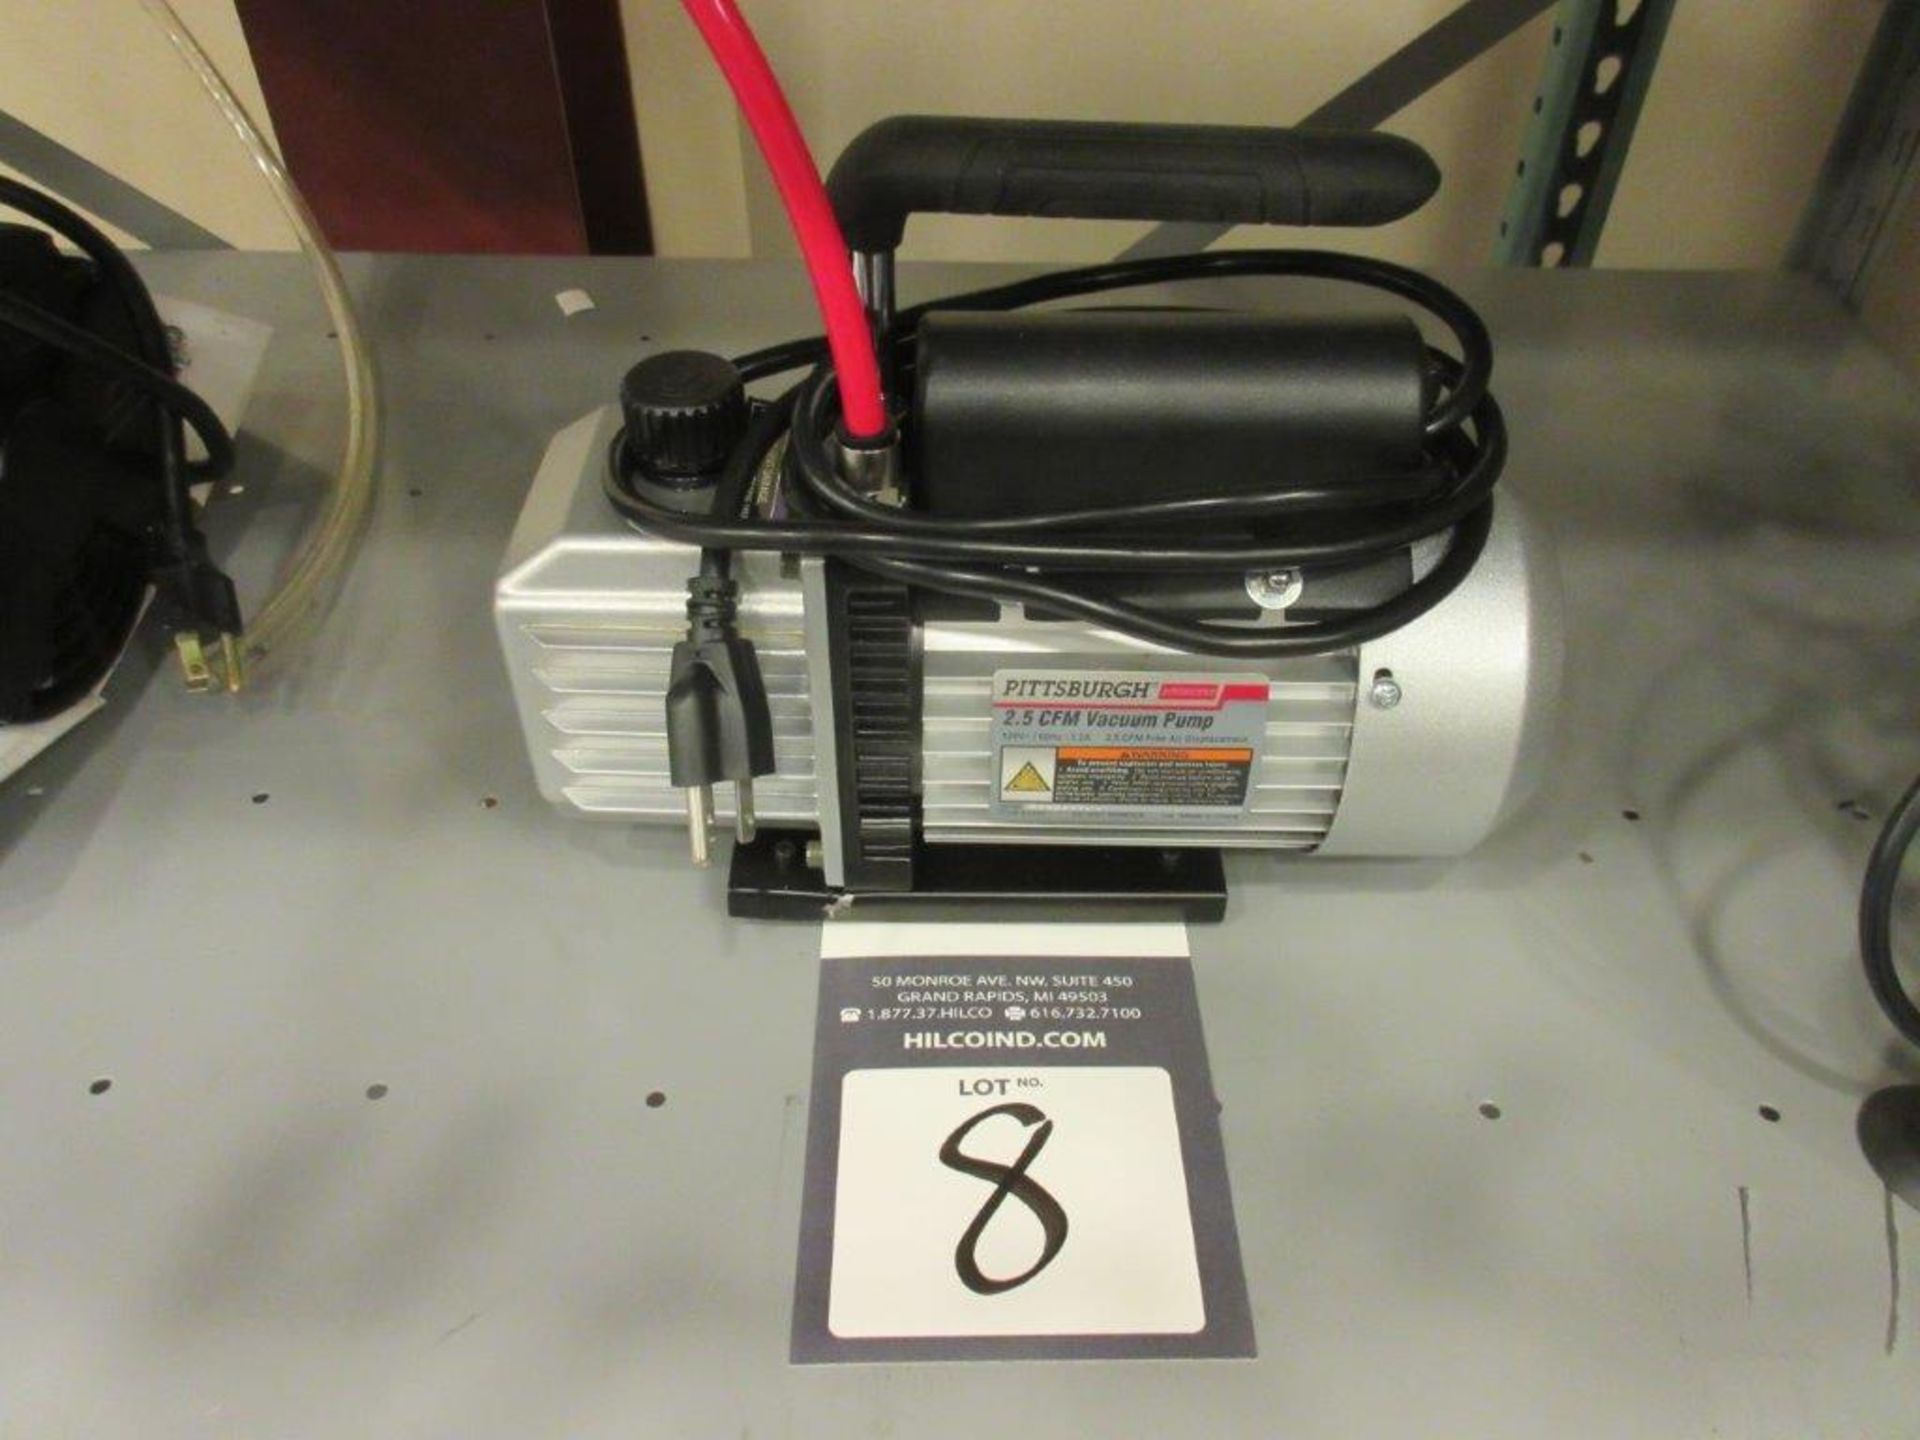 Pittsburgh 2.5 CFM Vacuum Pump